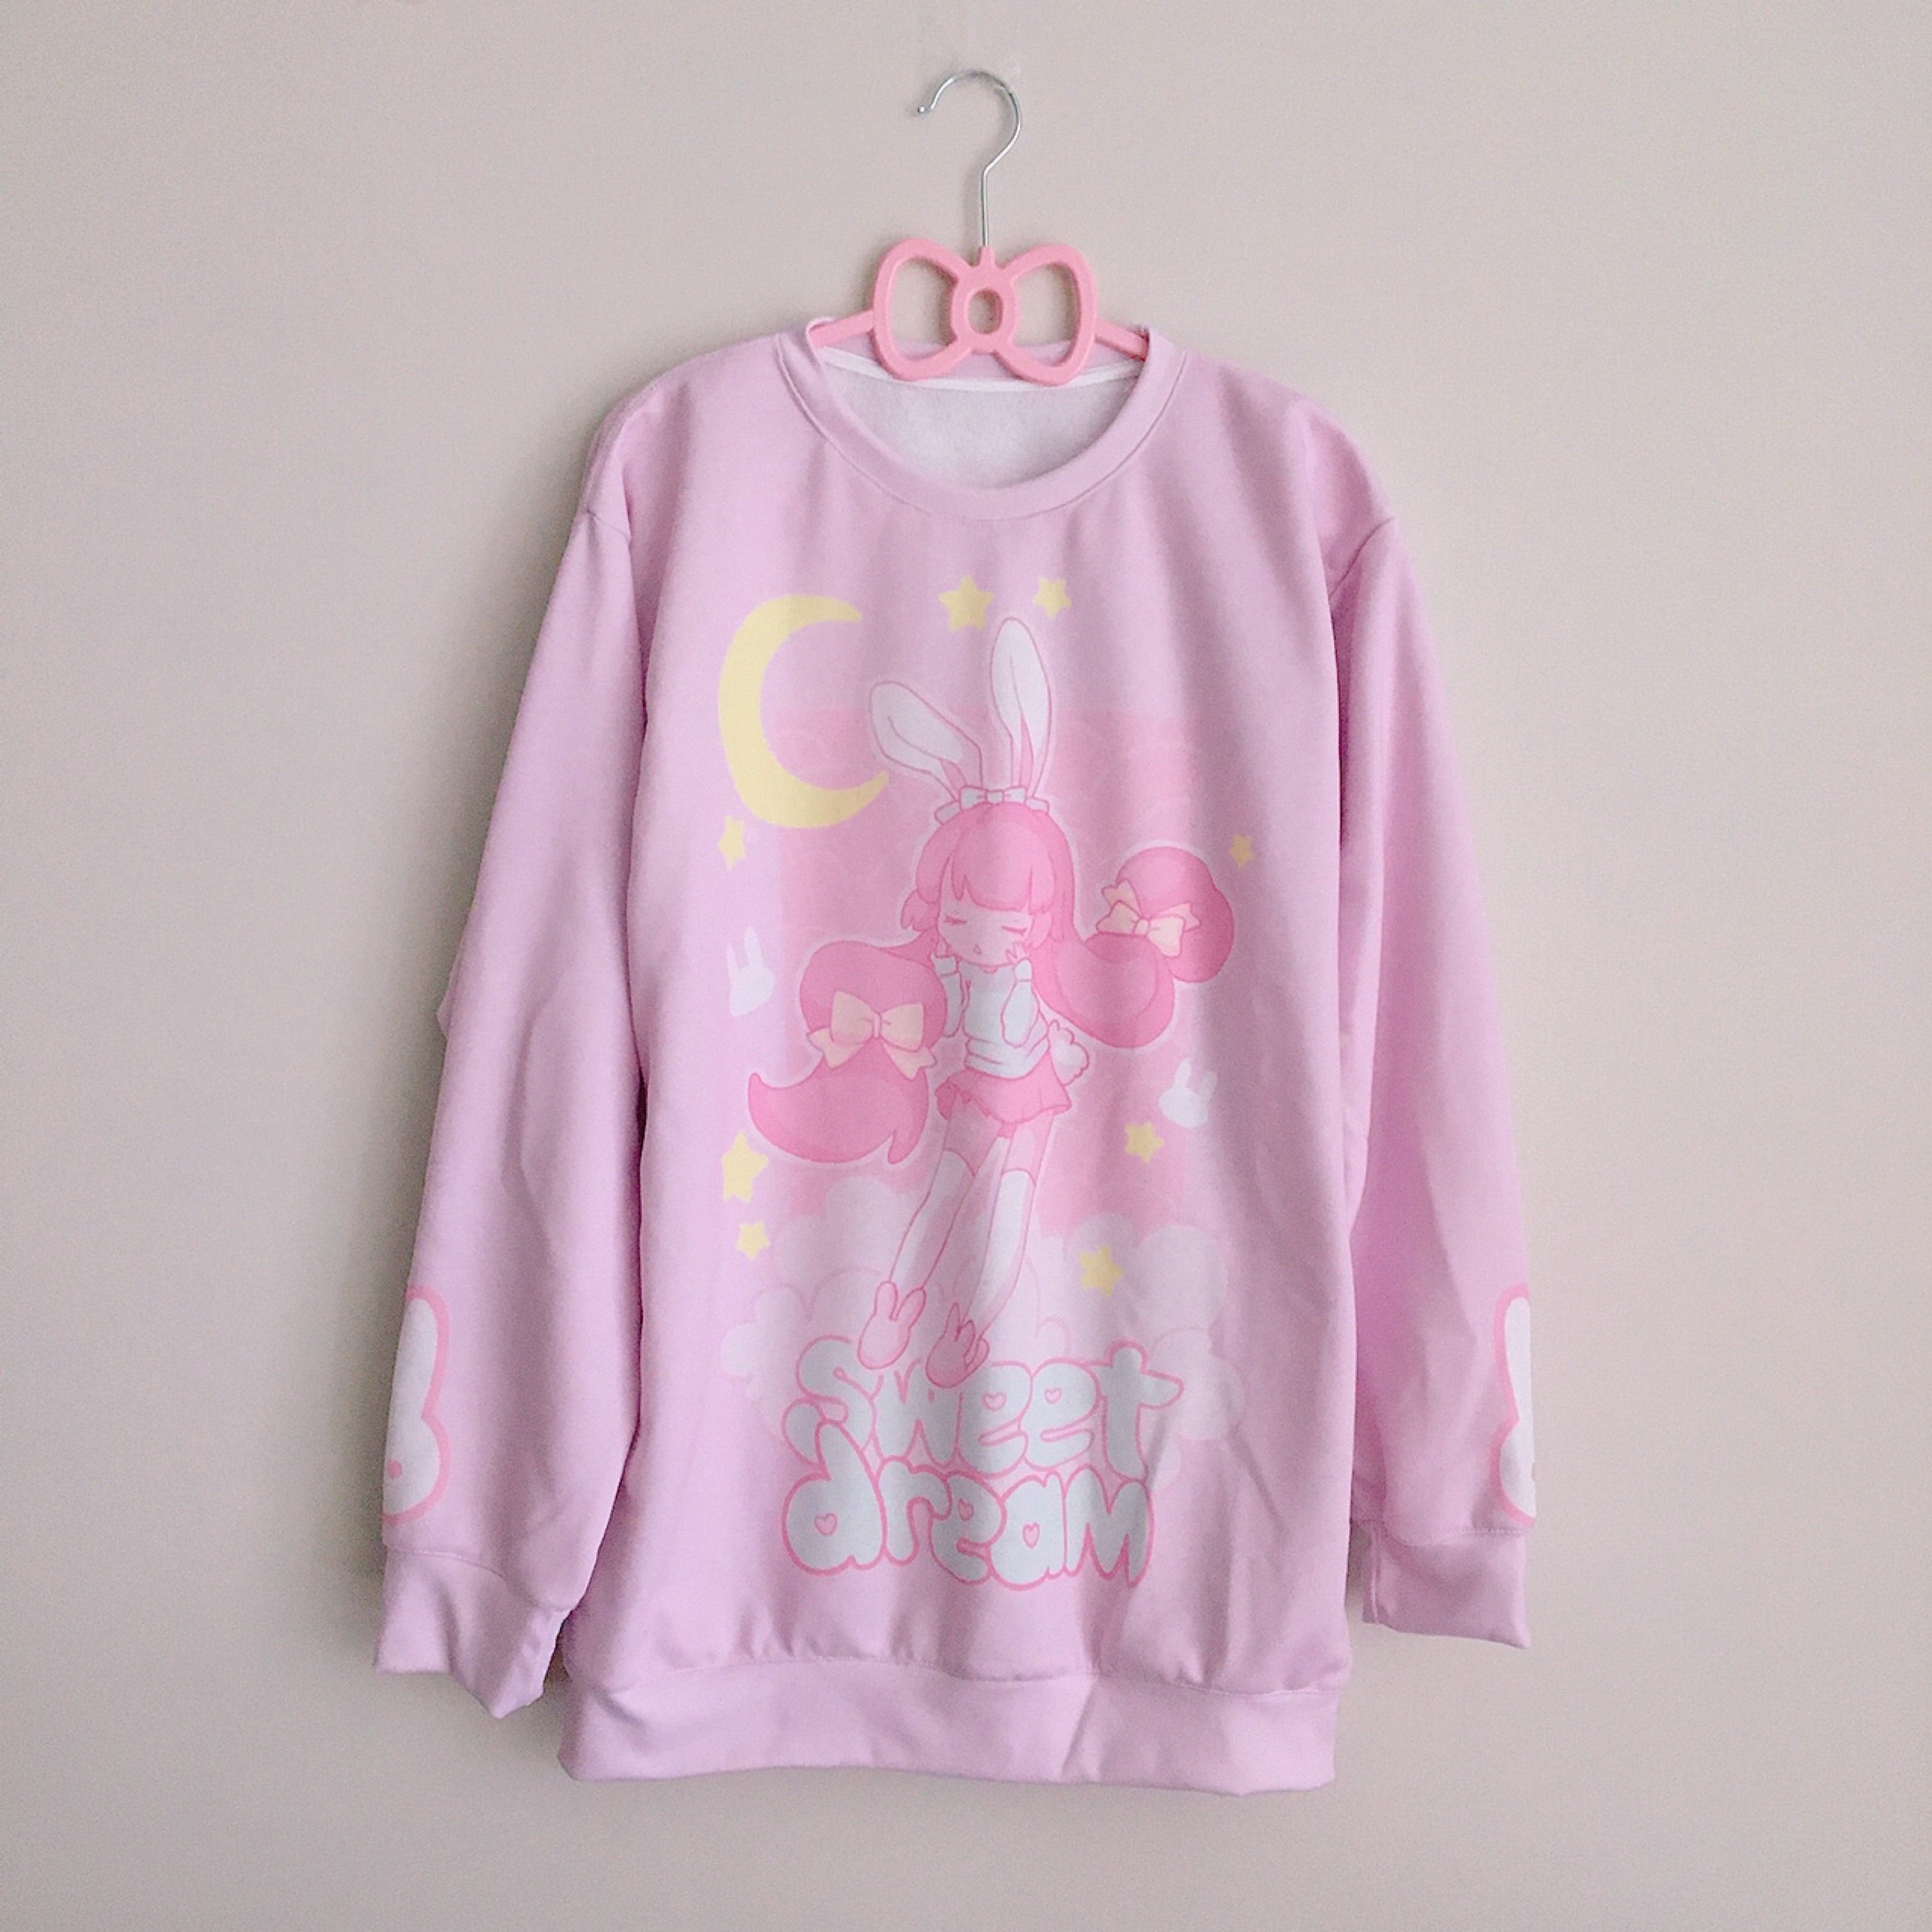 Below Zero Plush Coat In Pink • Impressions Online Boutique